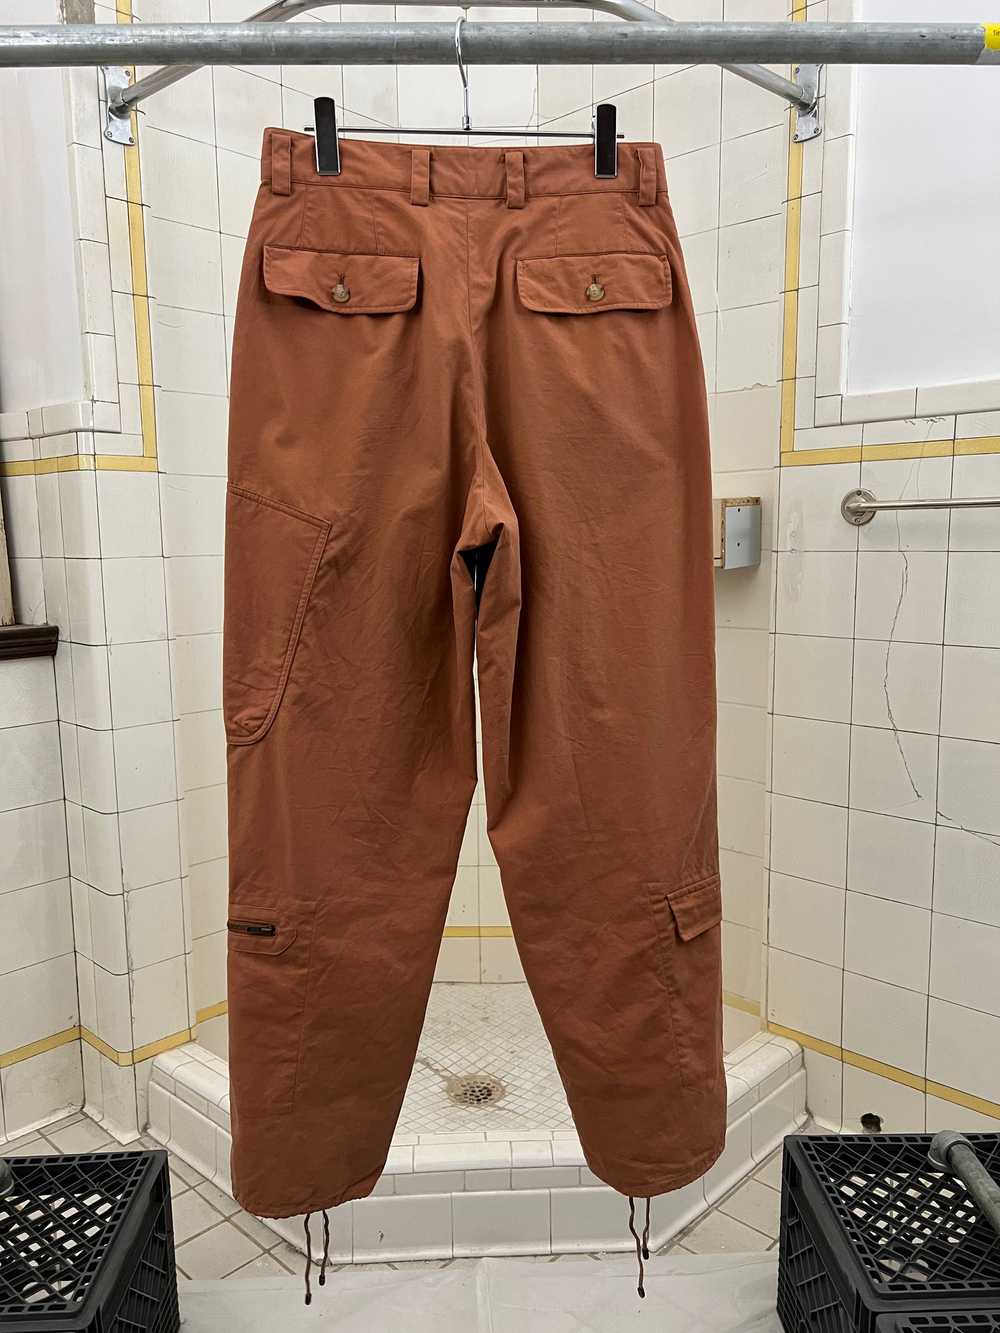 ss1993 Issey Miyake Cargo Pants - Size M - image 11